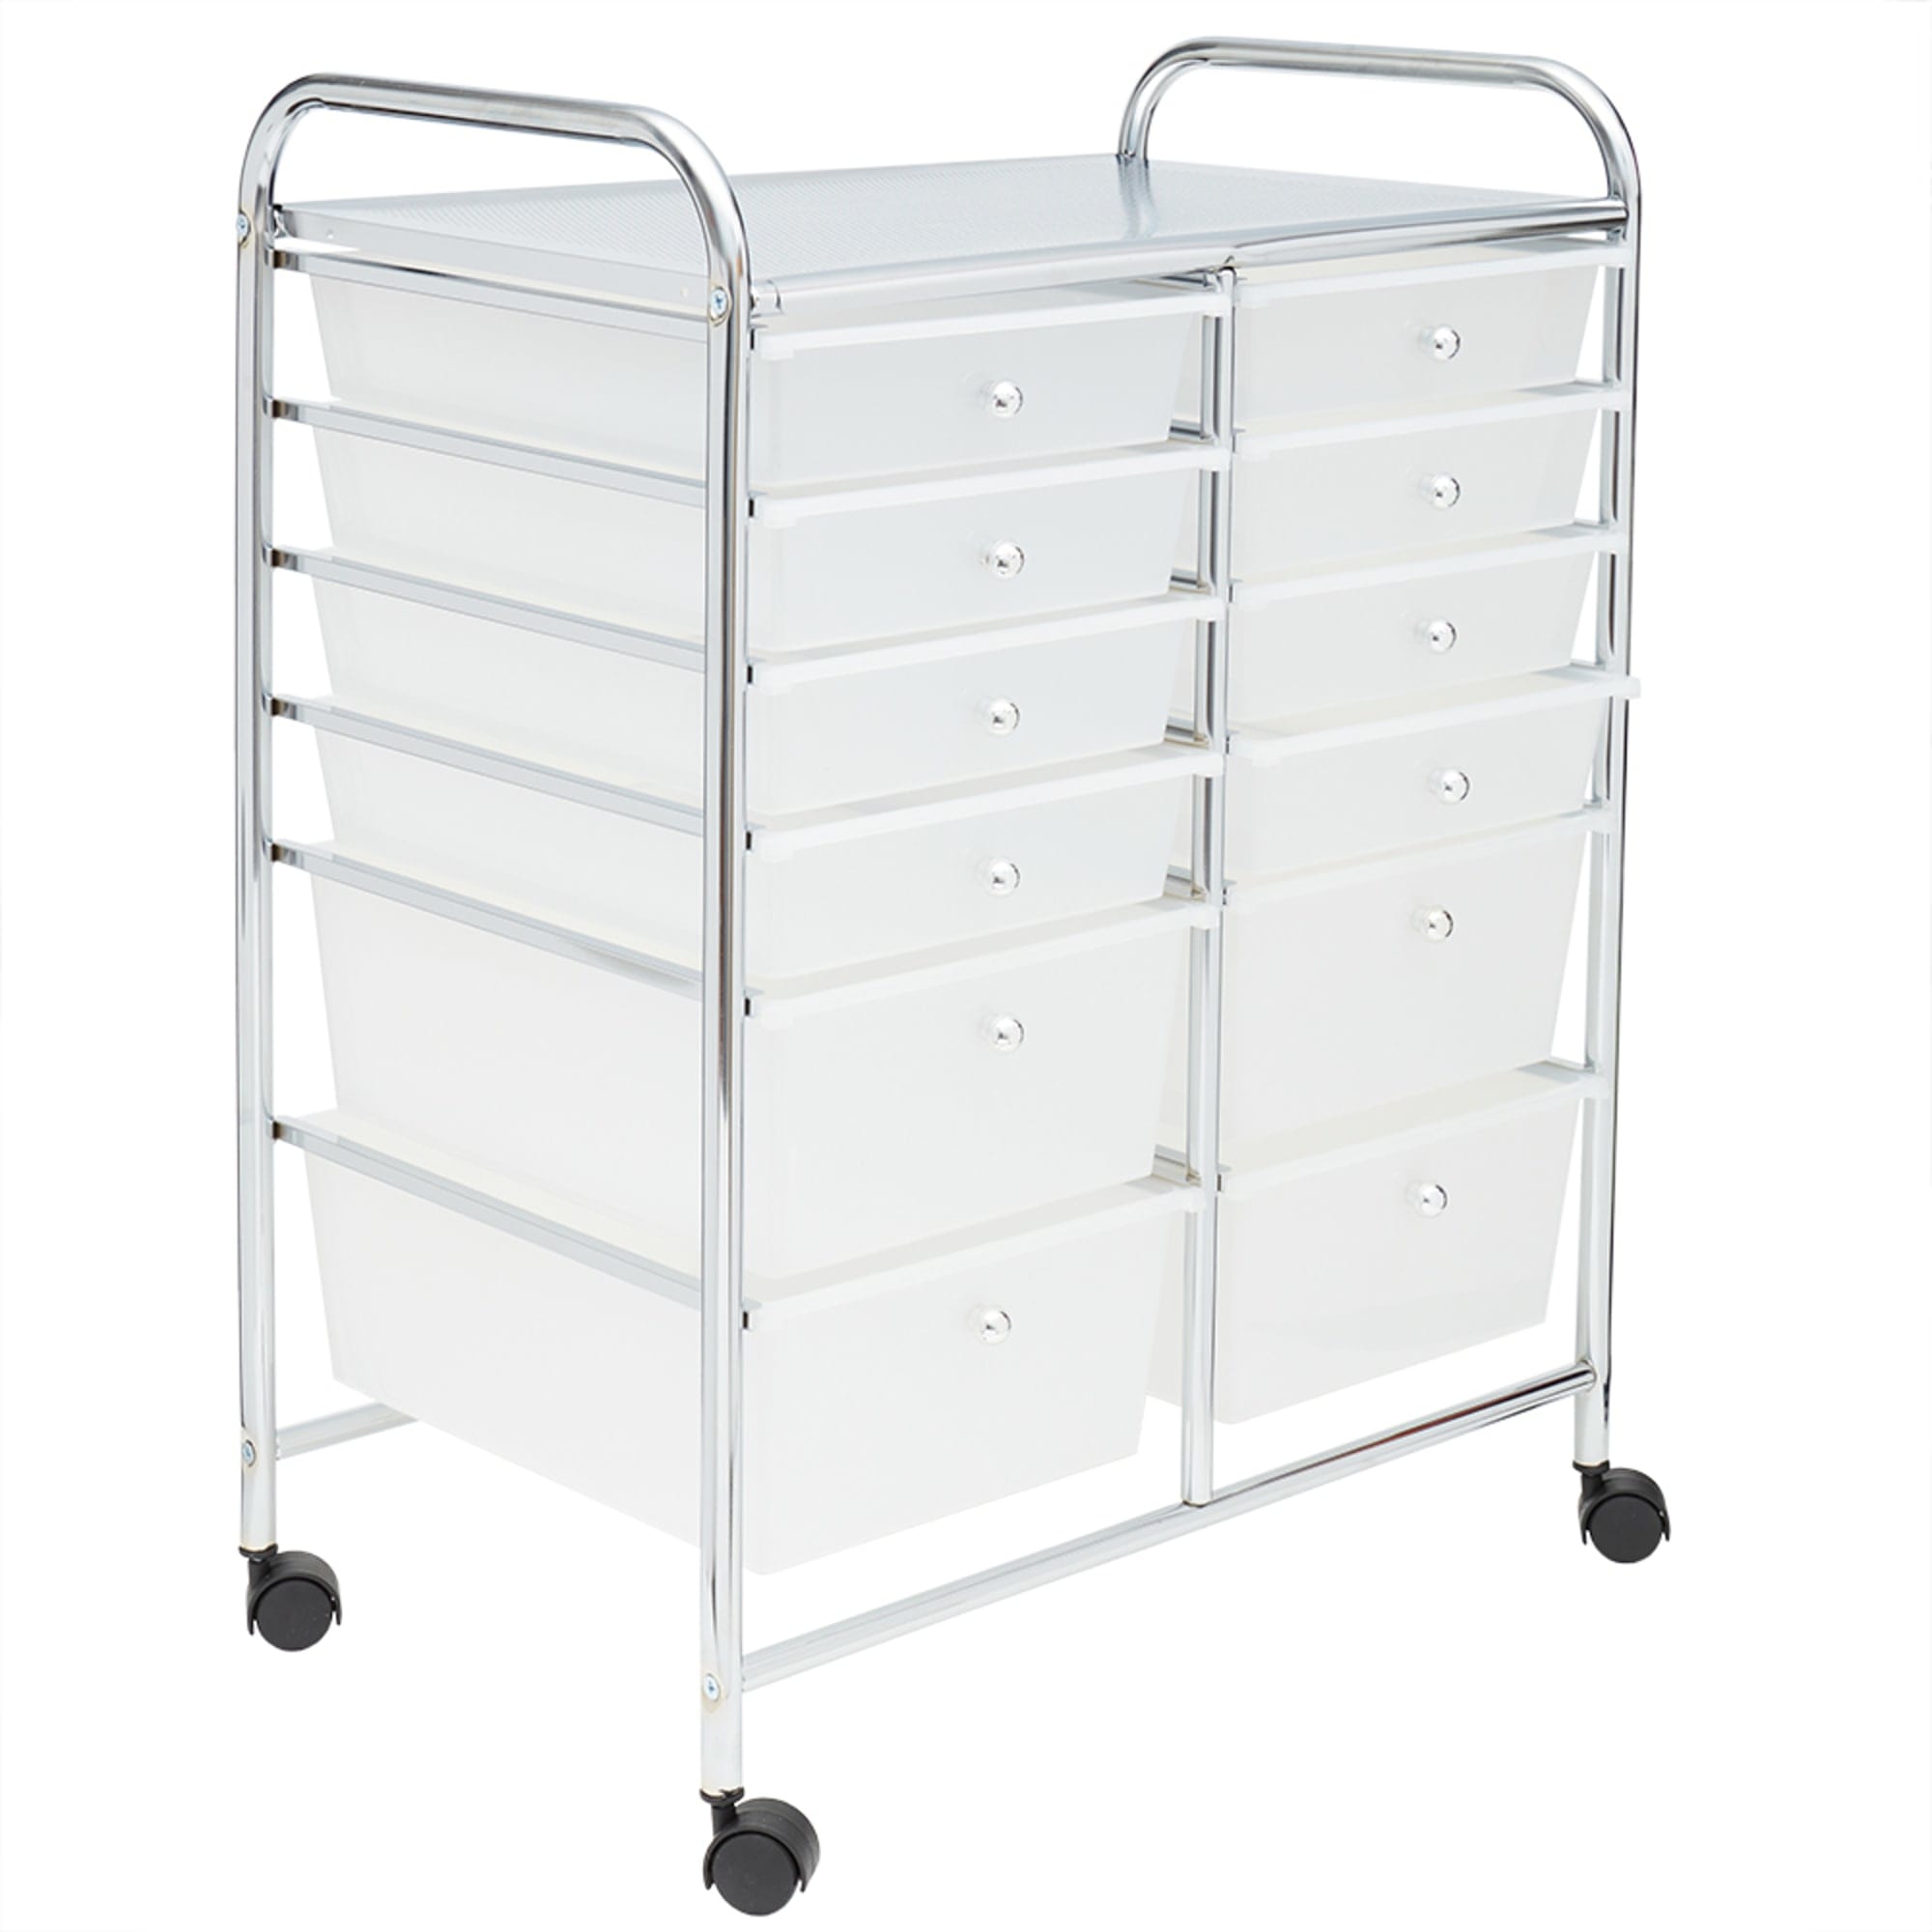 Home Basics 12-Drawer Storage Cart, White $70.00 EACH, CASE PACK OF 1